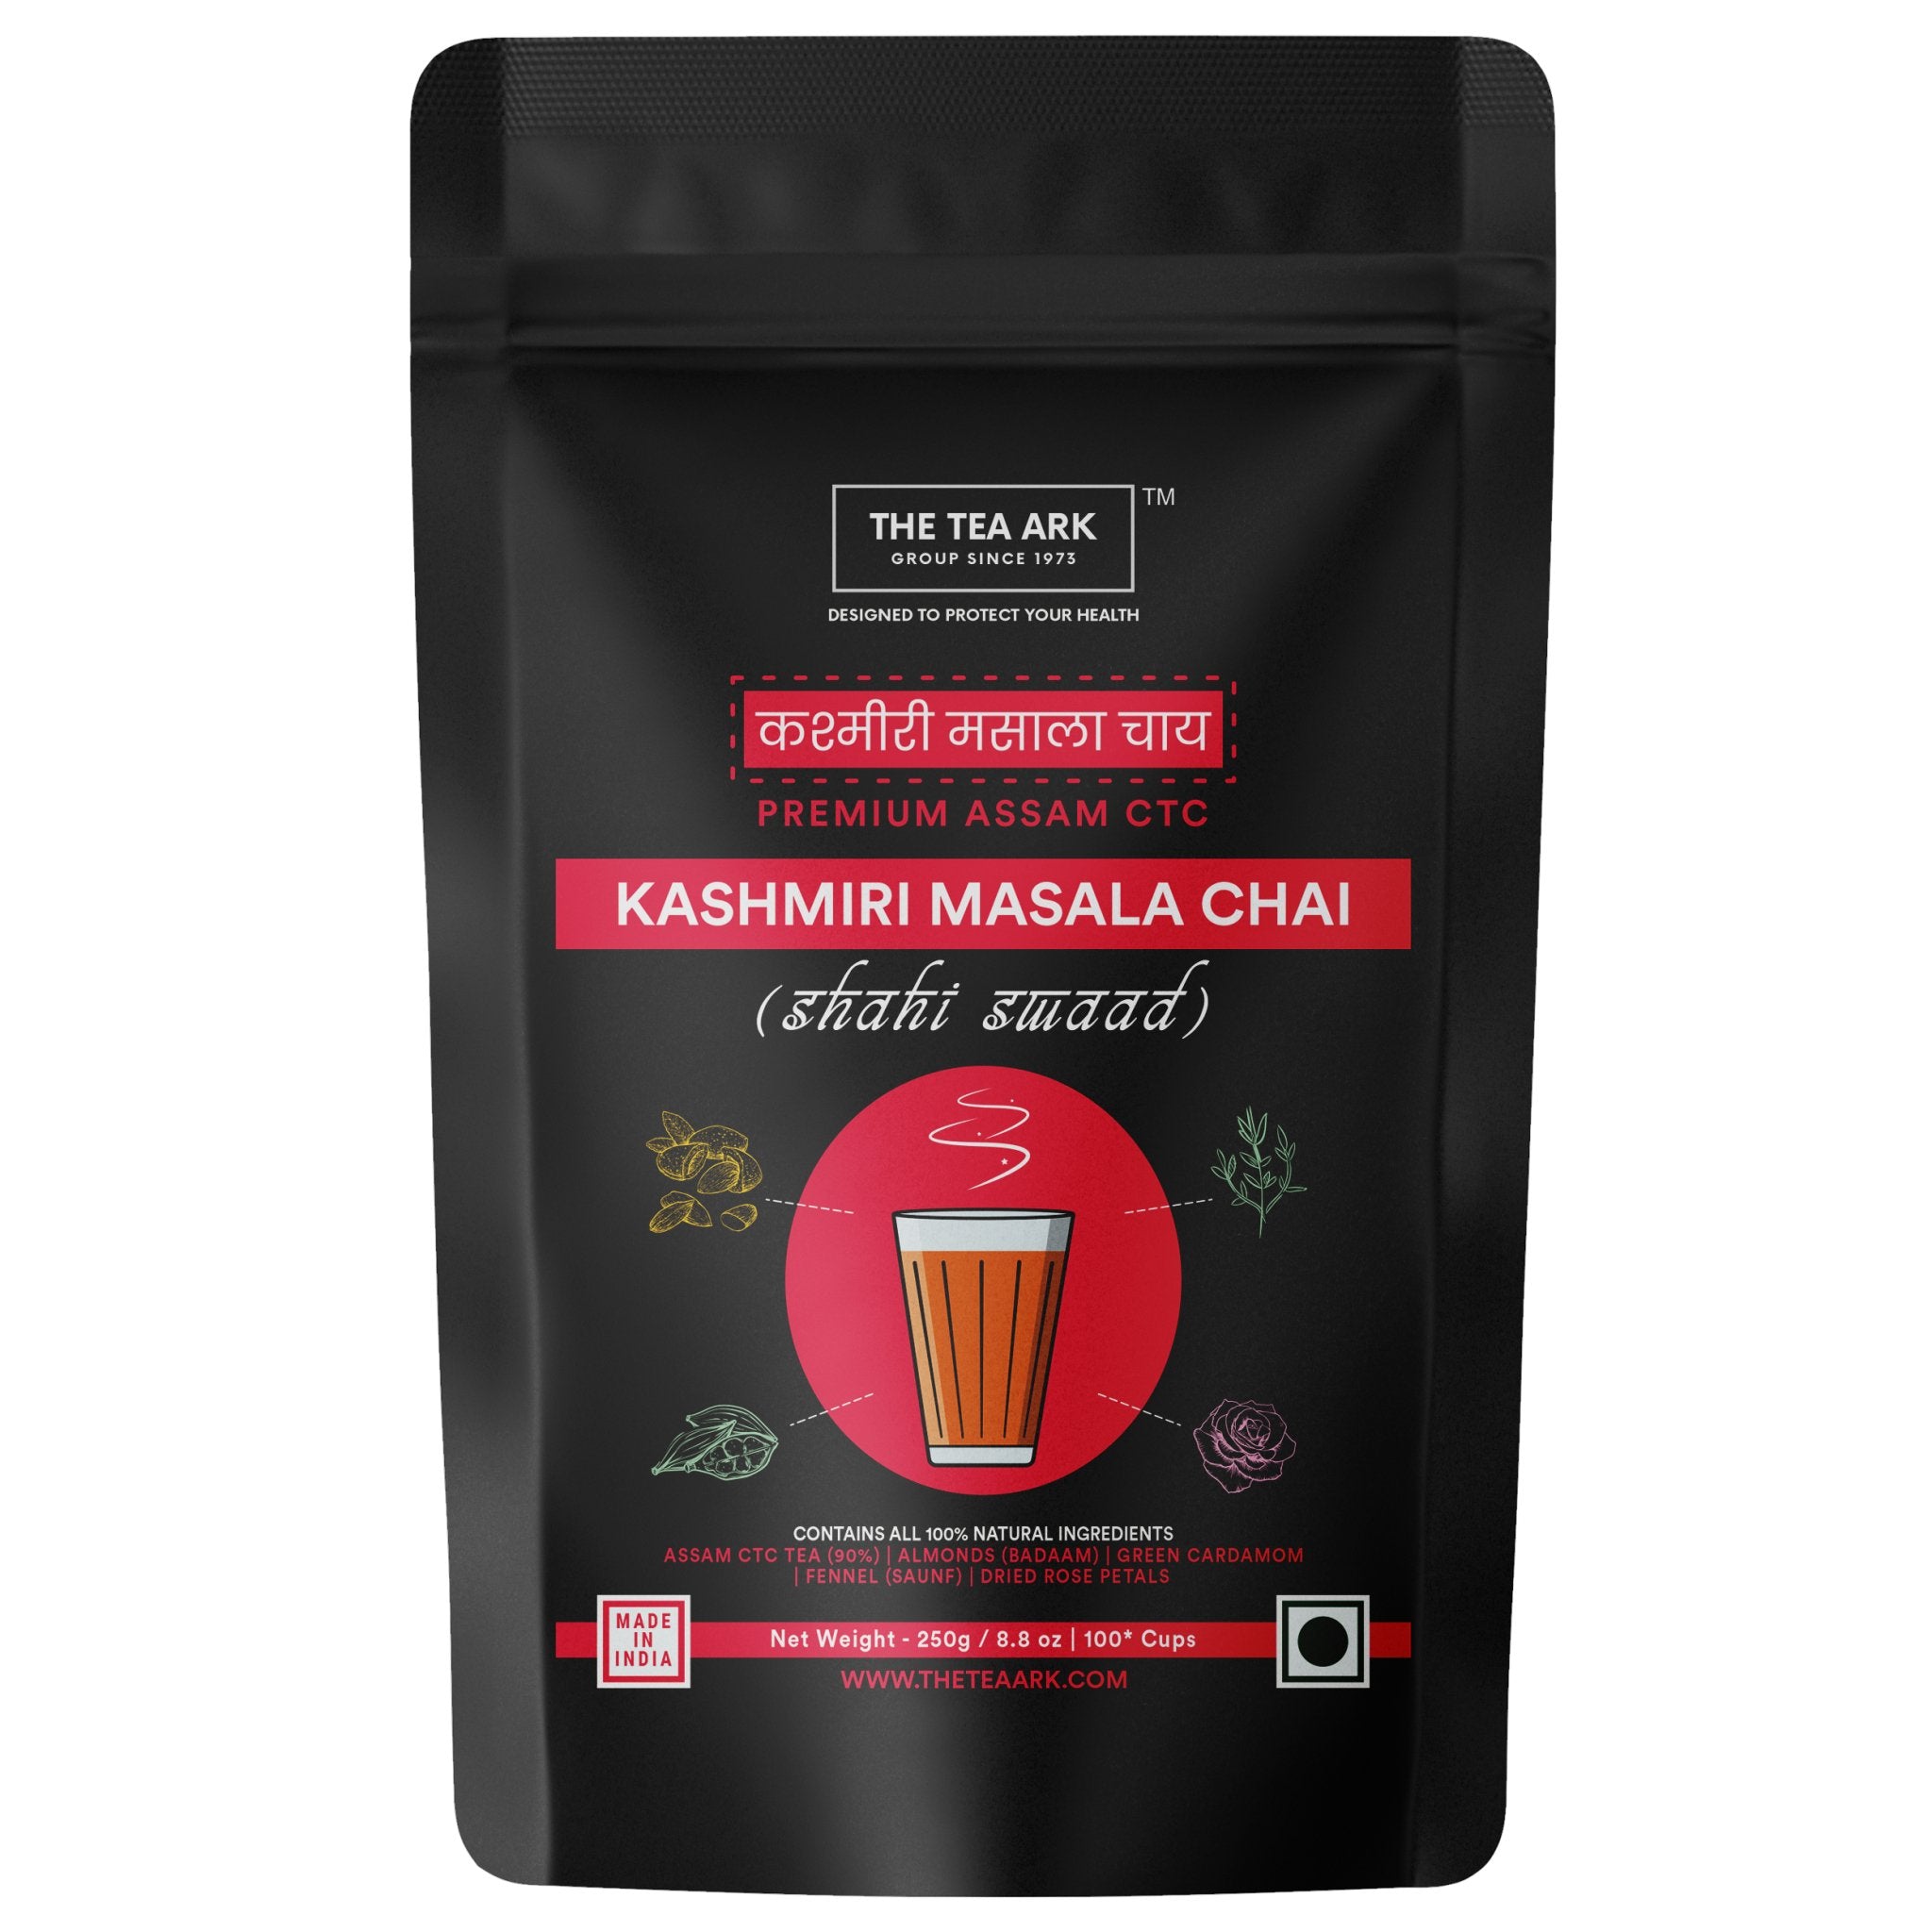 The Tea Ark Kashmiri Masala Chai, Shahi Swaad with Premium Assam CTC, 250g - Inlife Pharma Private Limited